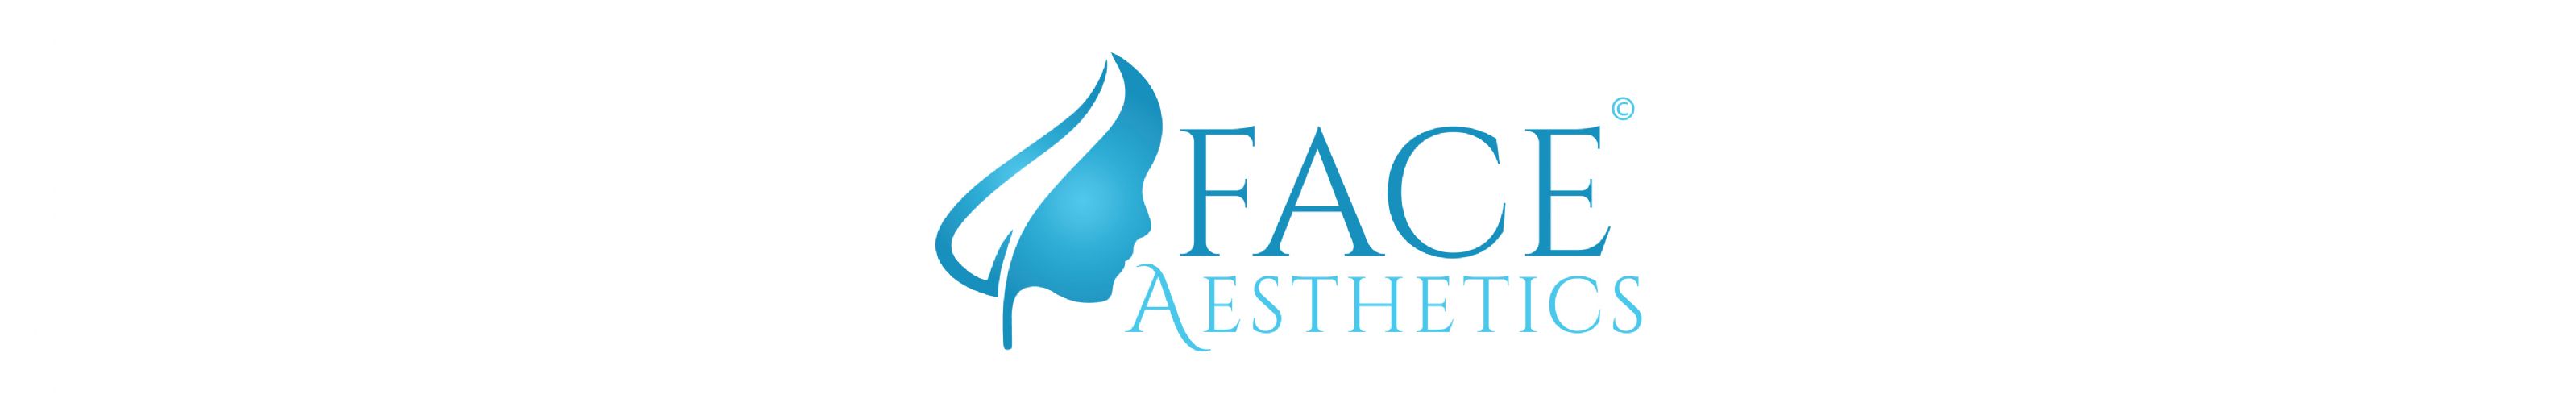 Face Aesthetics - Watford Banner